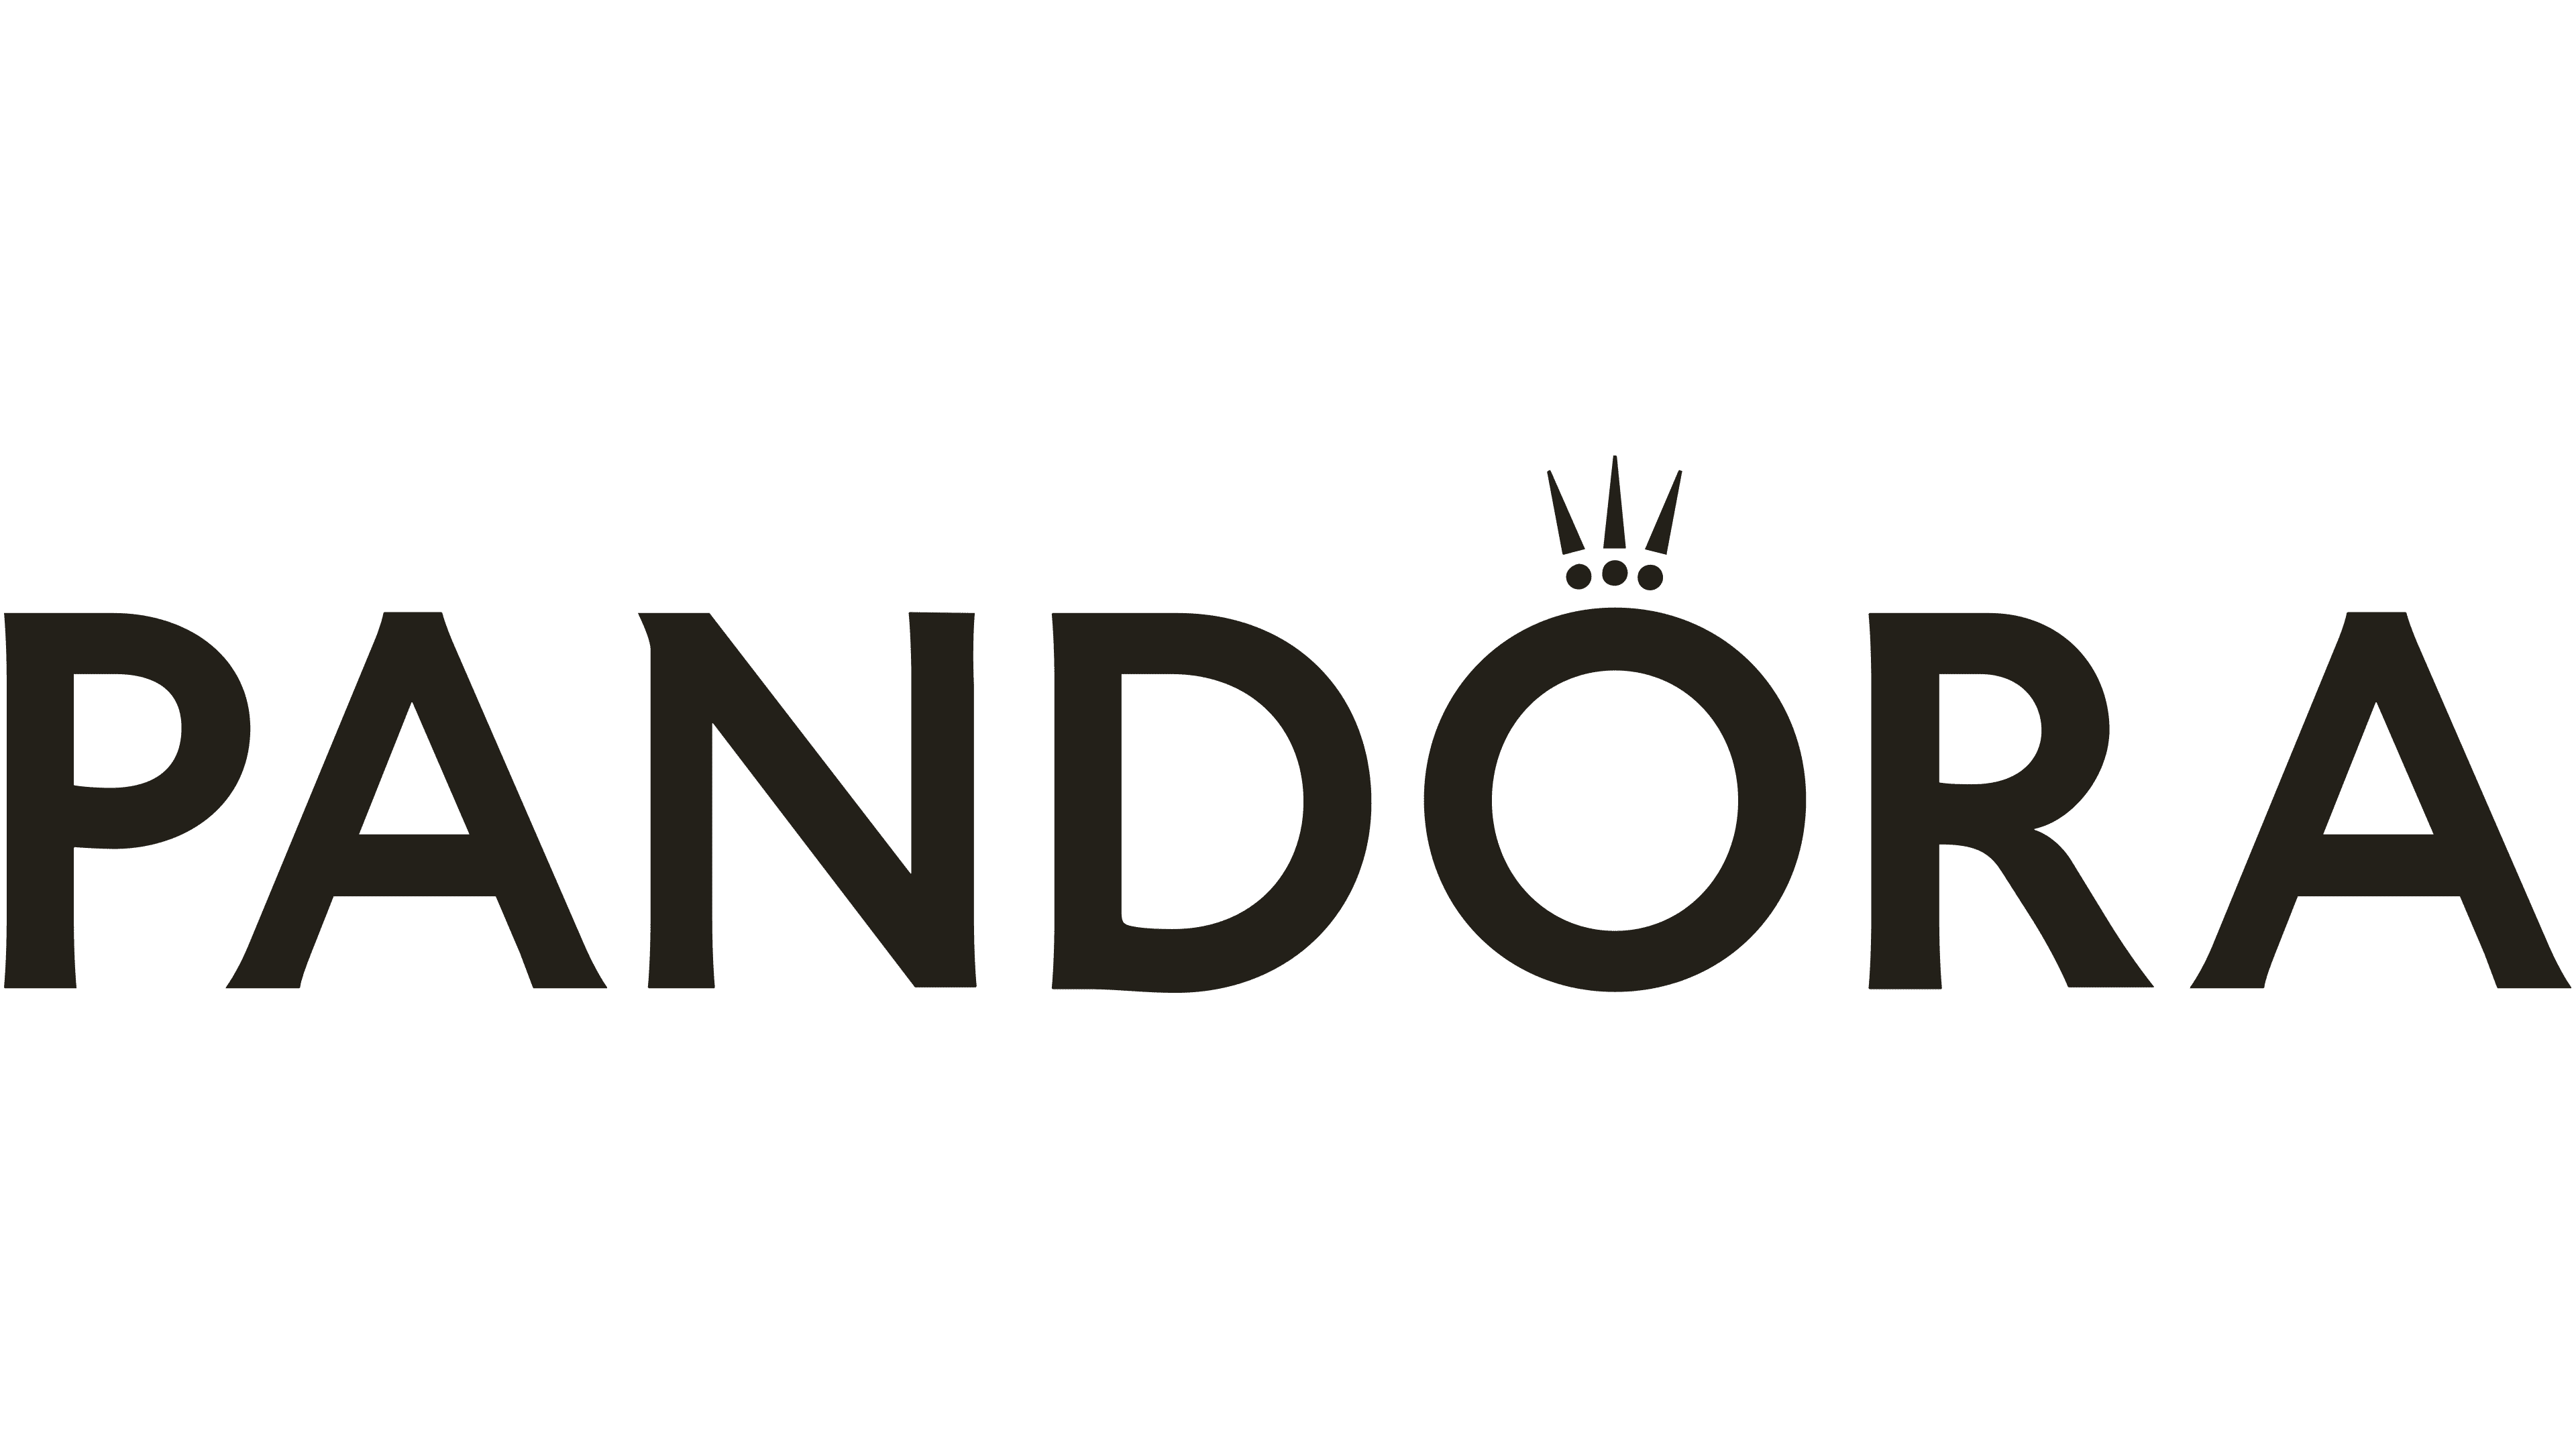 [Retail] - Pandora logo